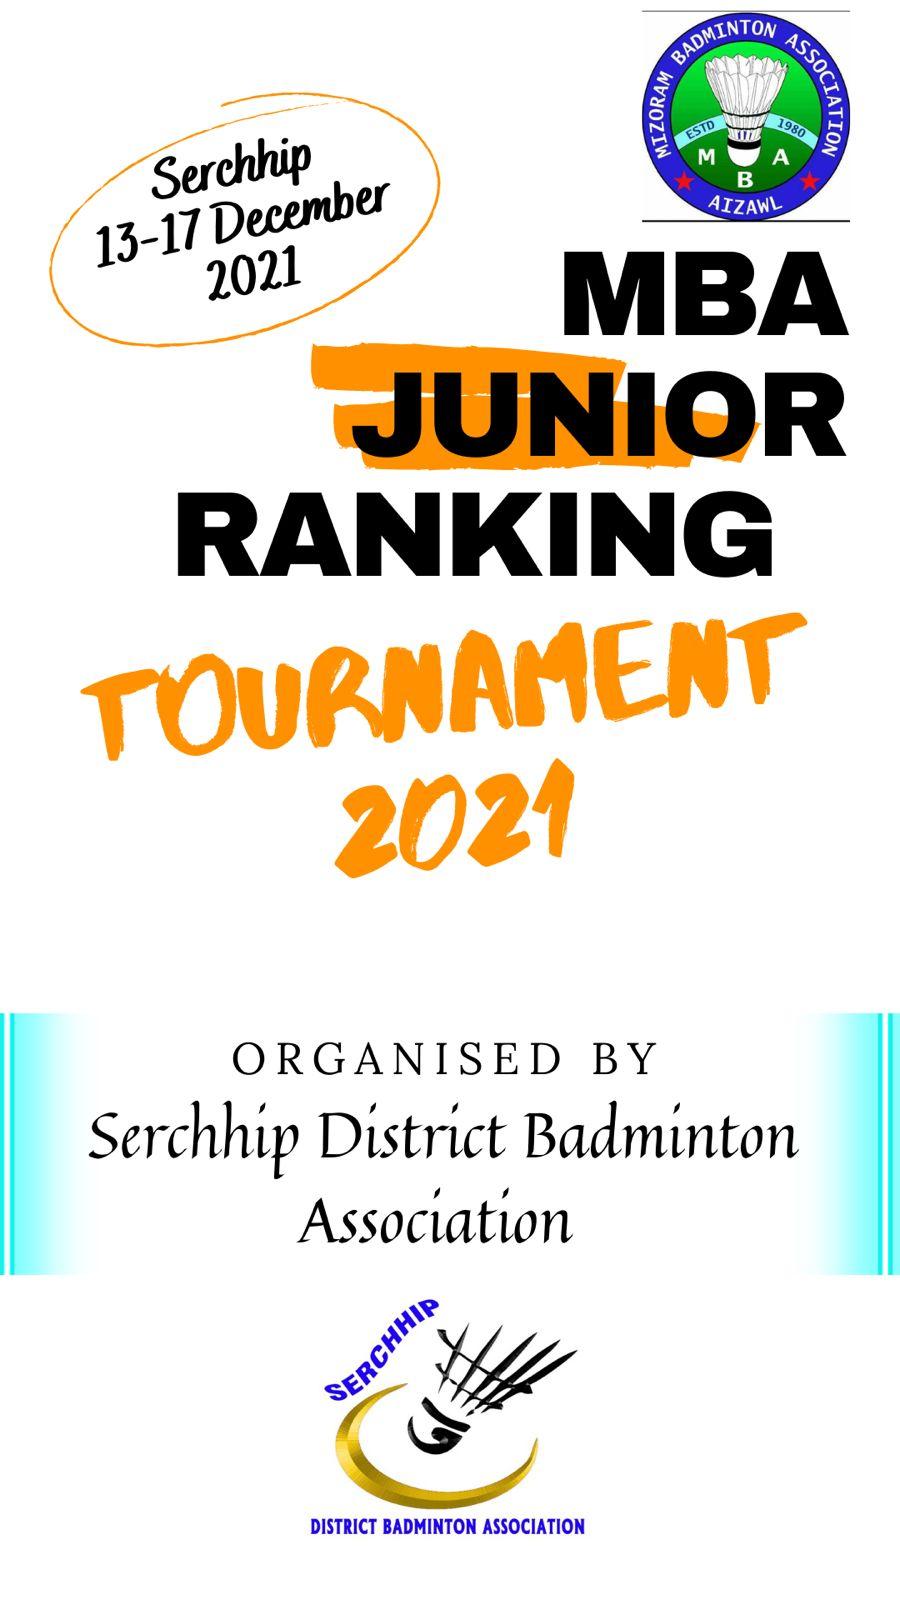 MBA Junior ranking tournamnet 2021-22 - Serchhip